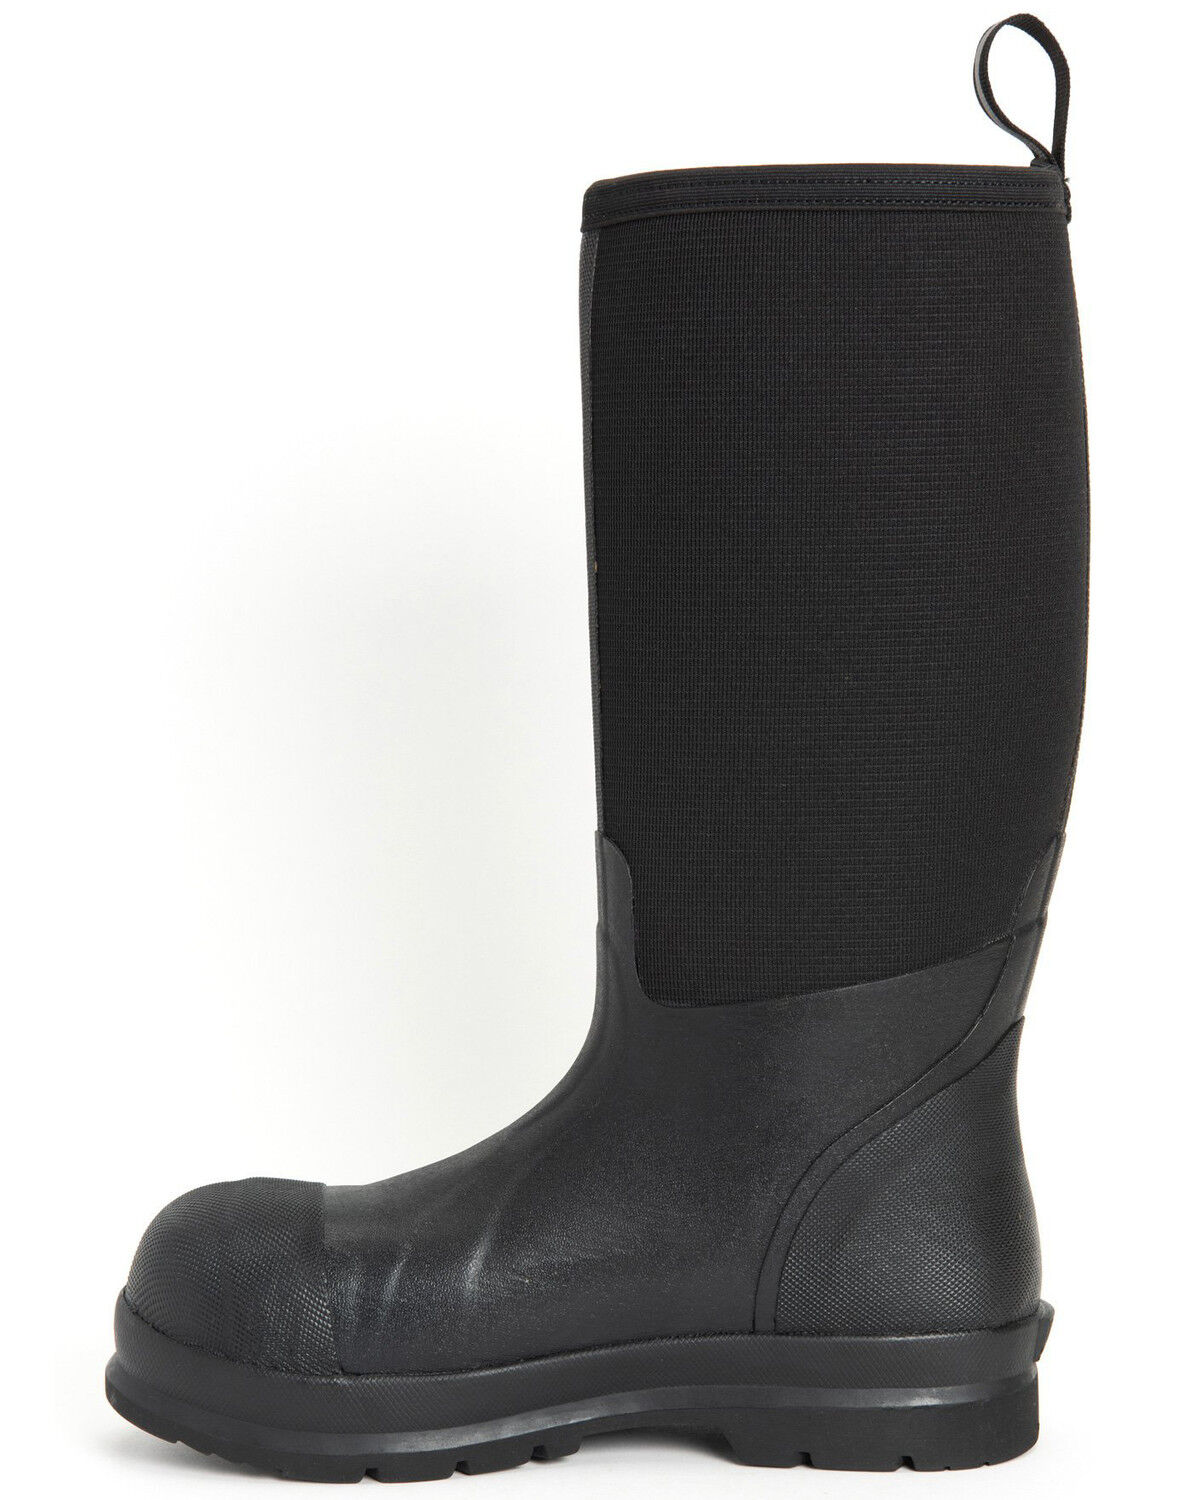 composite toe rain boots